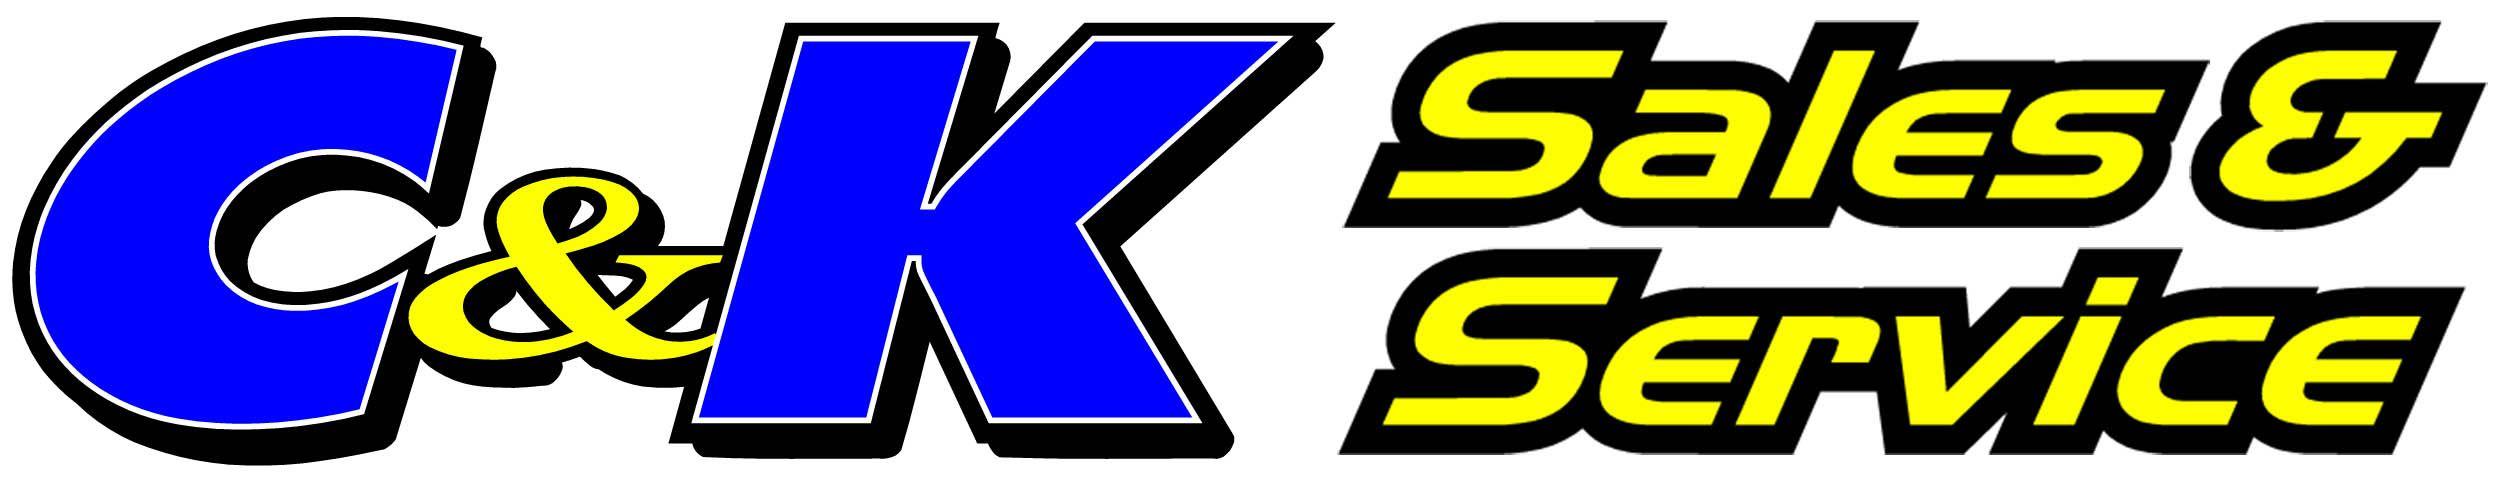 Sales and Service Logo - Komatsu Forklift - C & K Sales and Service